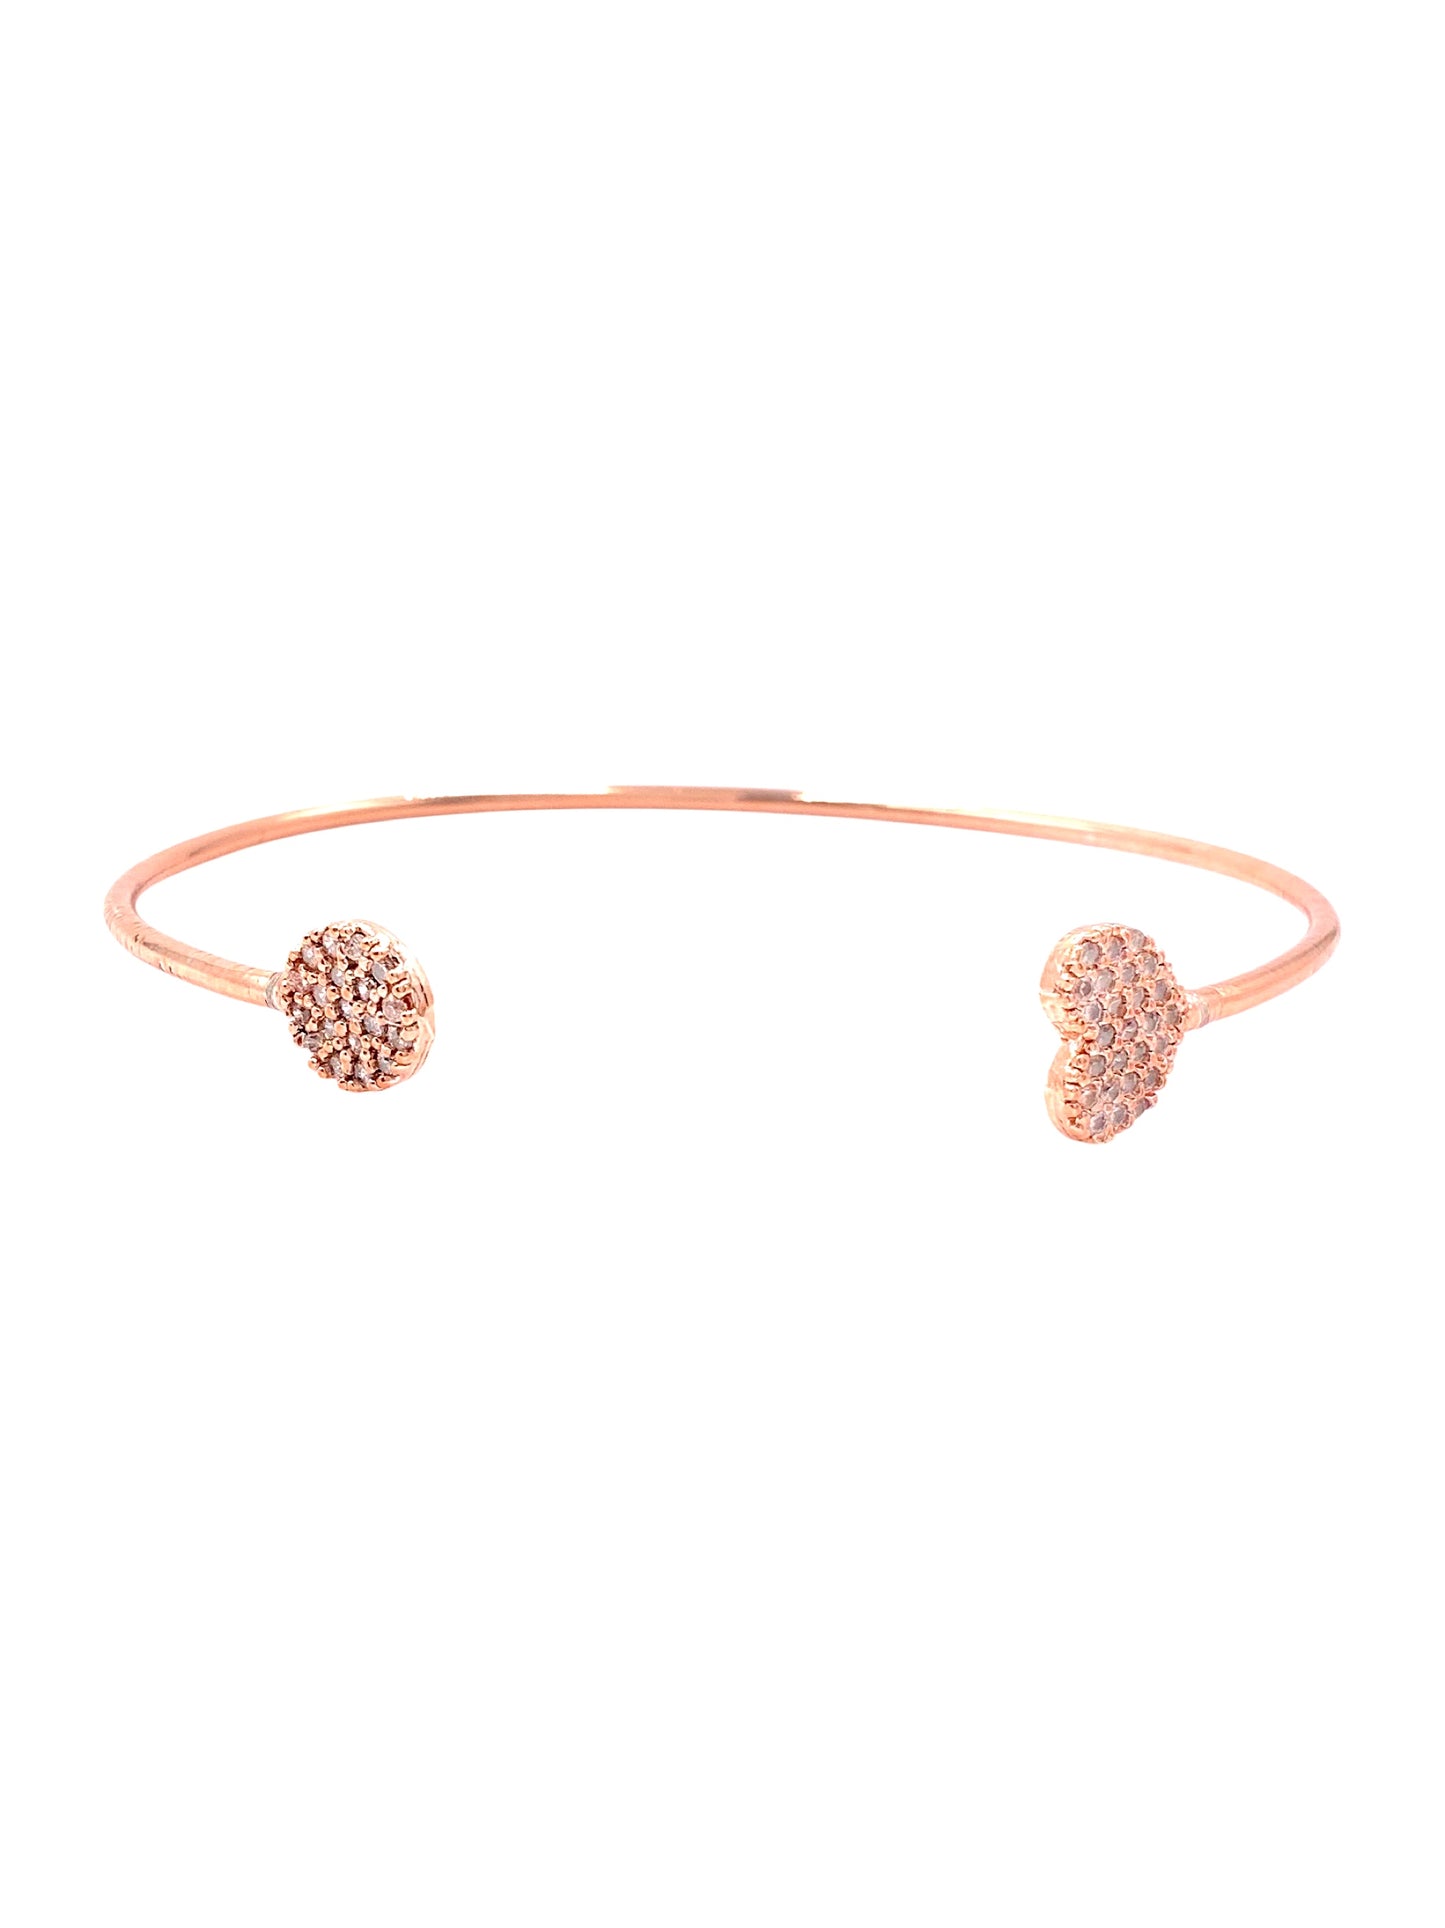 Rose Gold CZ Heart and Circle Bangle Bracelet